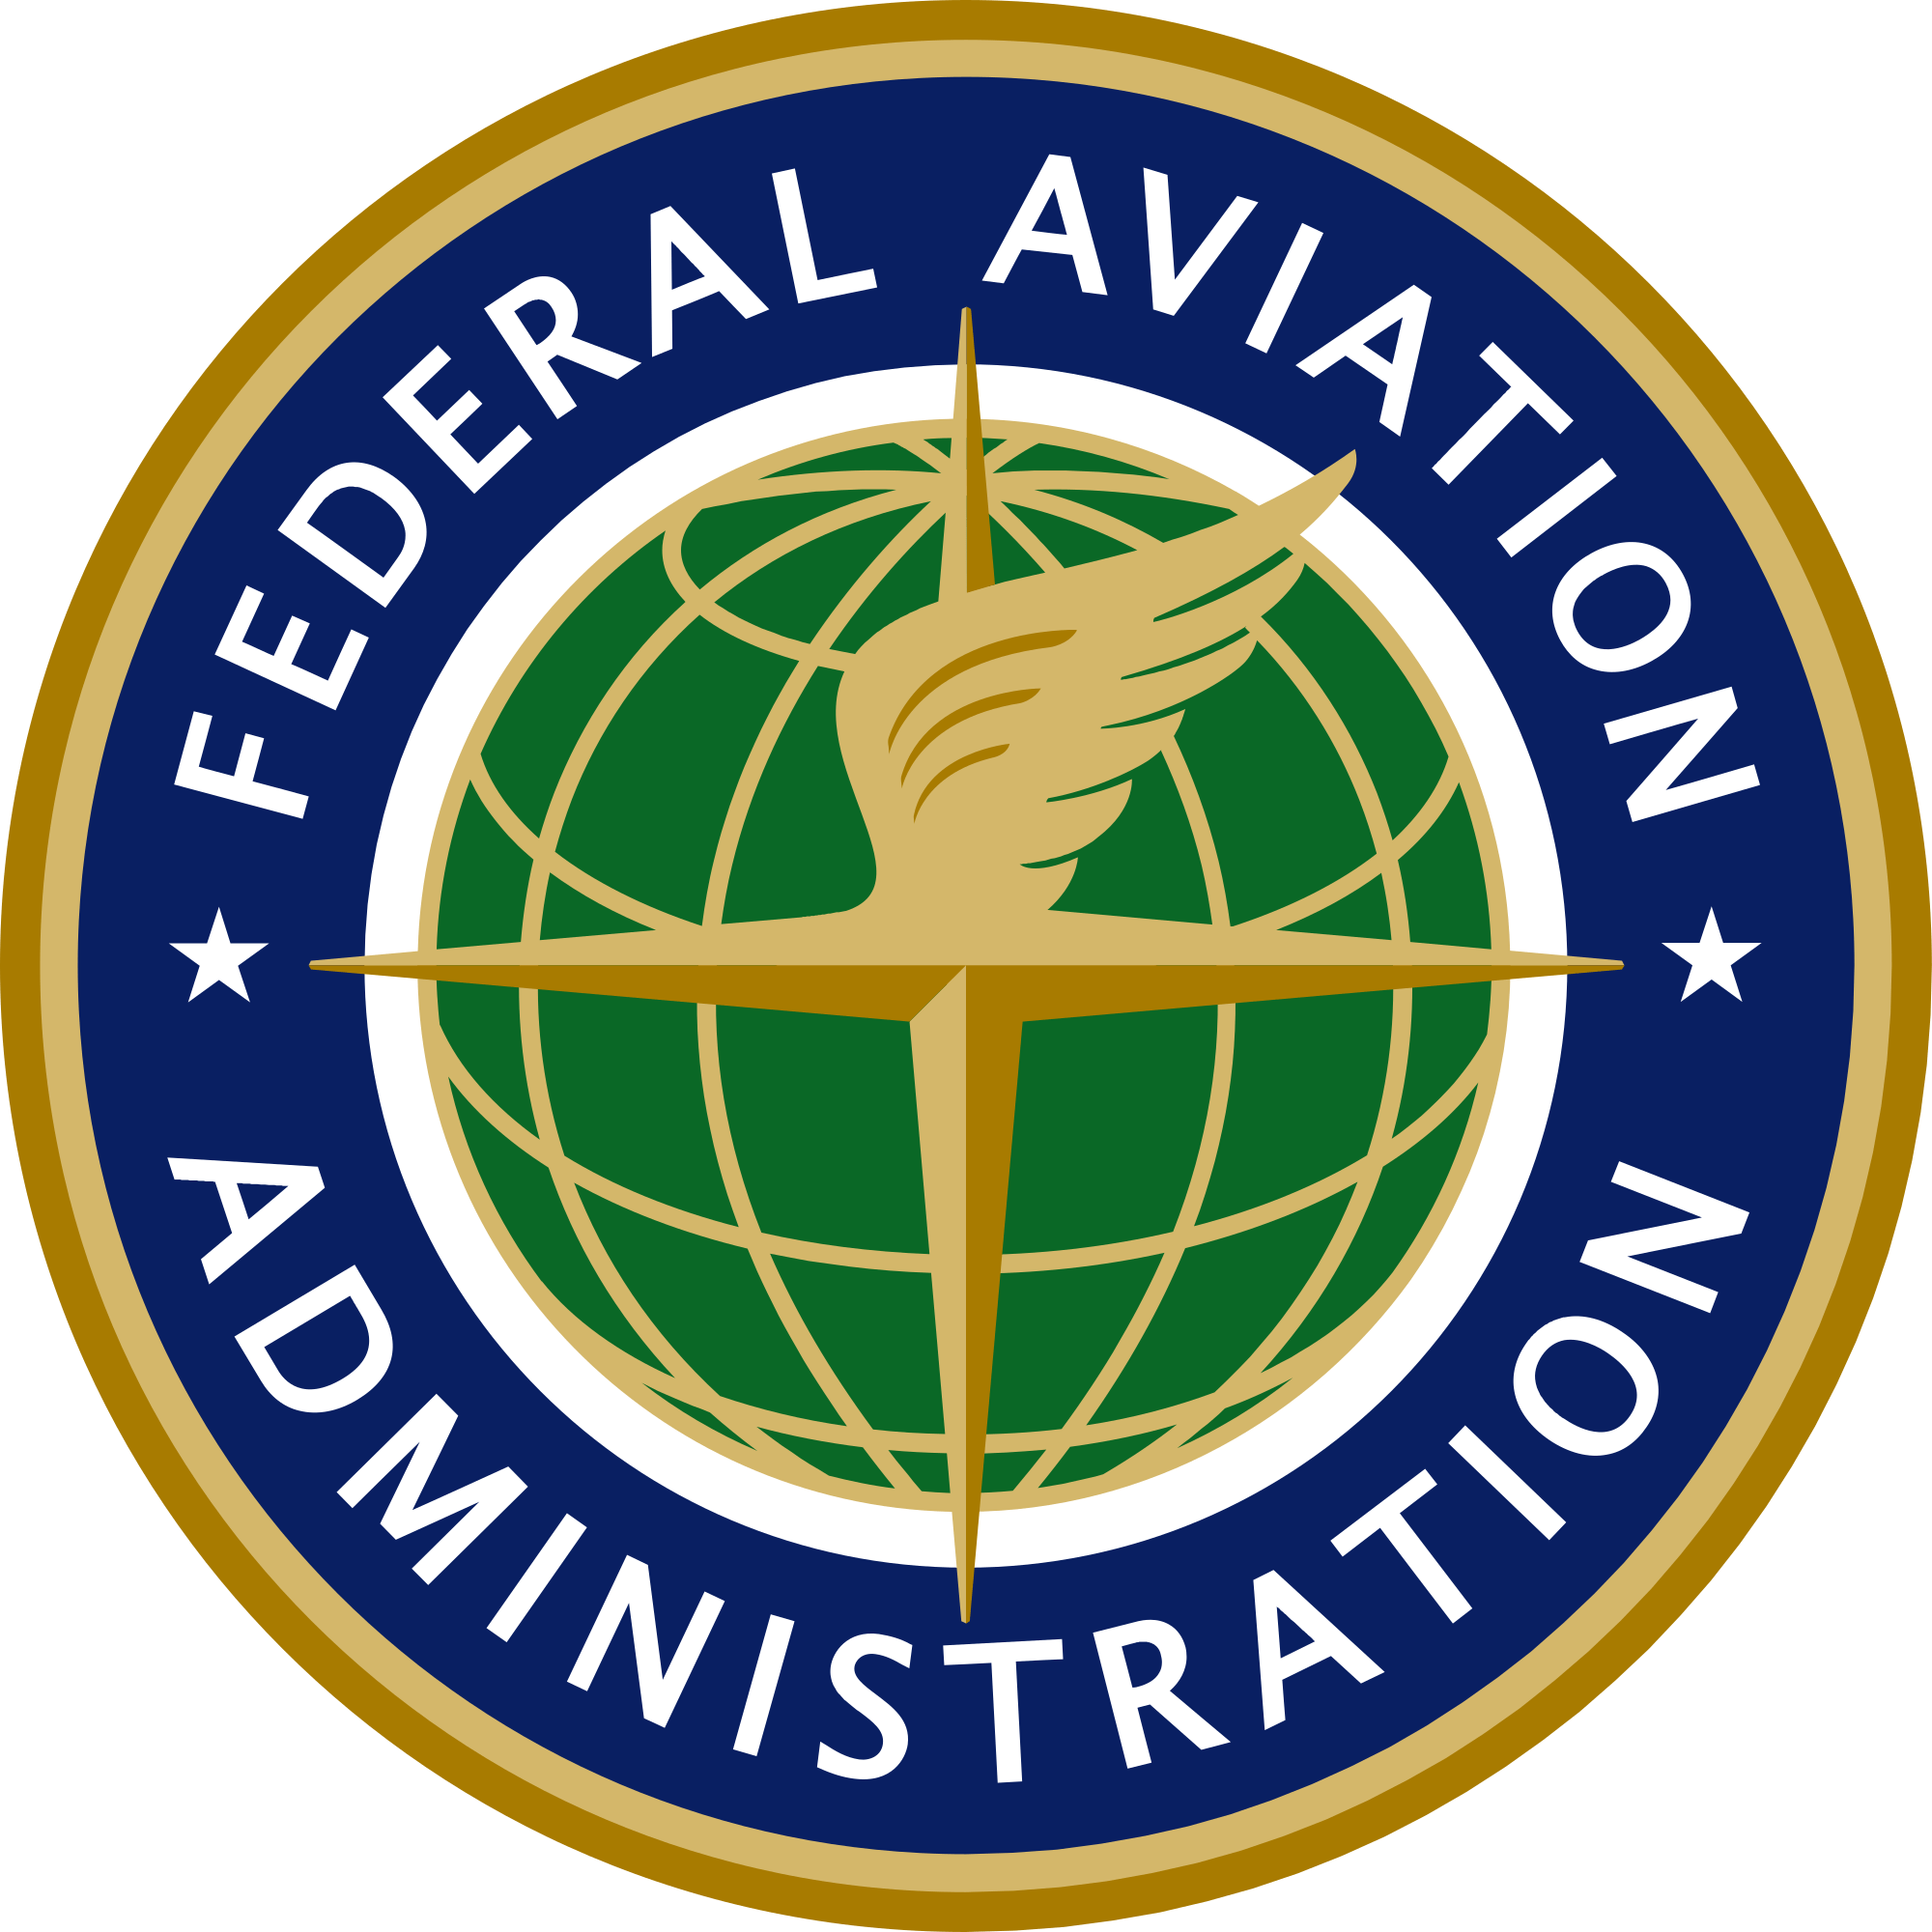 Us Aerospace Company Logo - Federal Aviation Administration